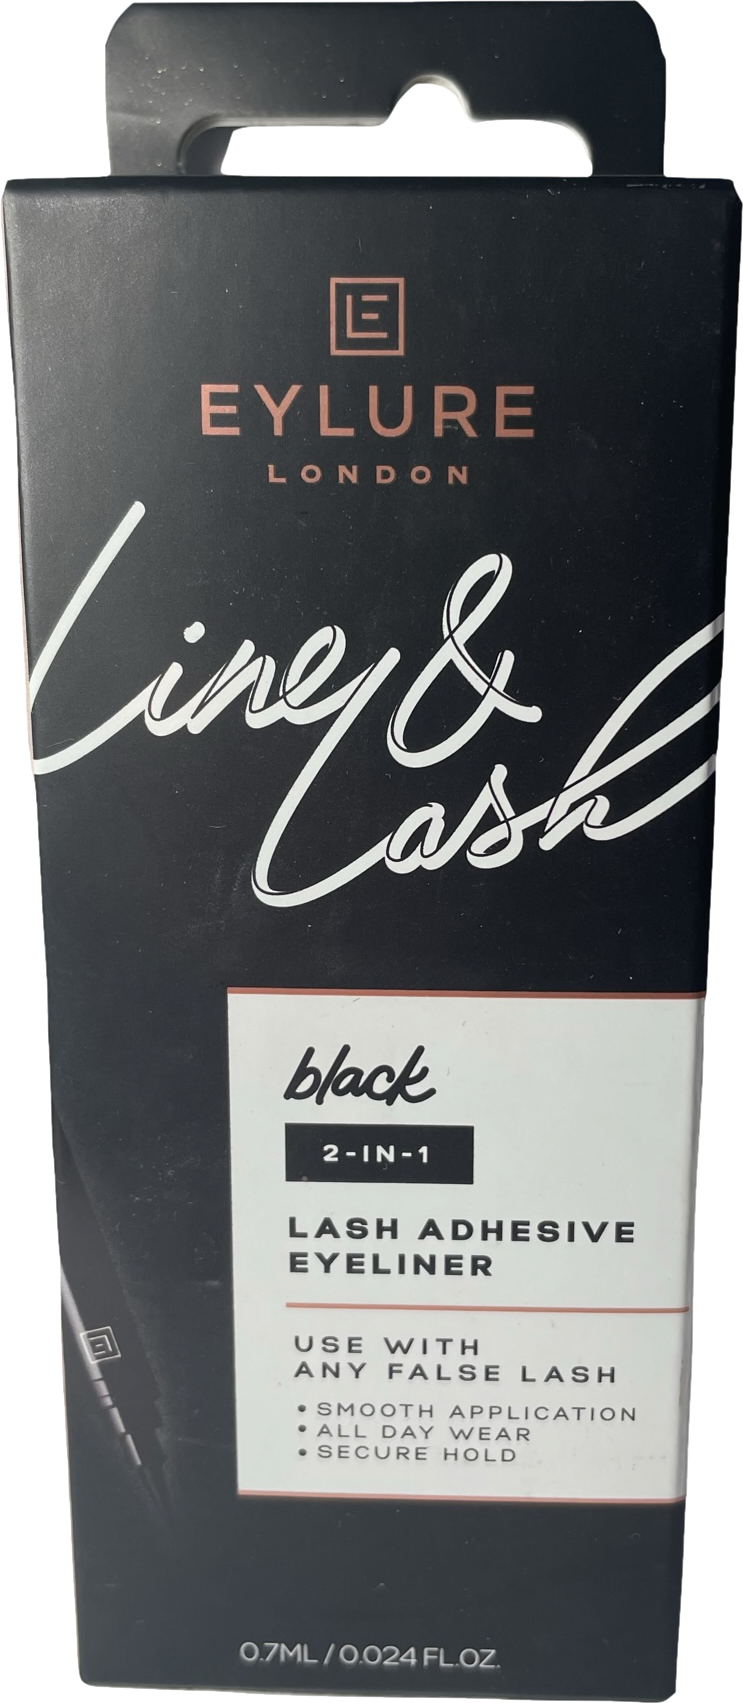 Eylure Line & Lash Adhesive Eyeliner Black 0.7ml